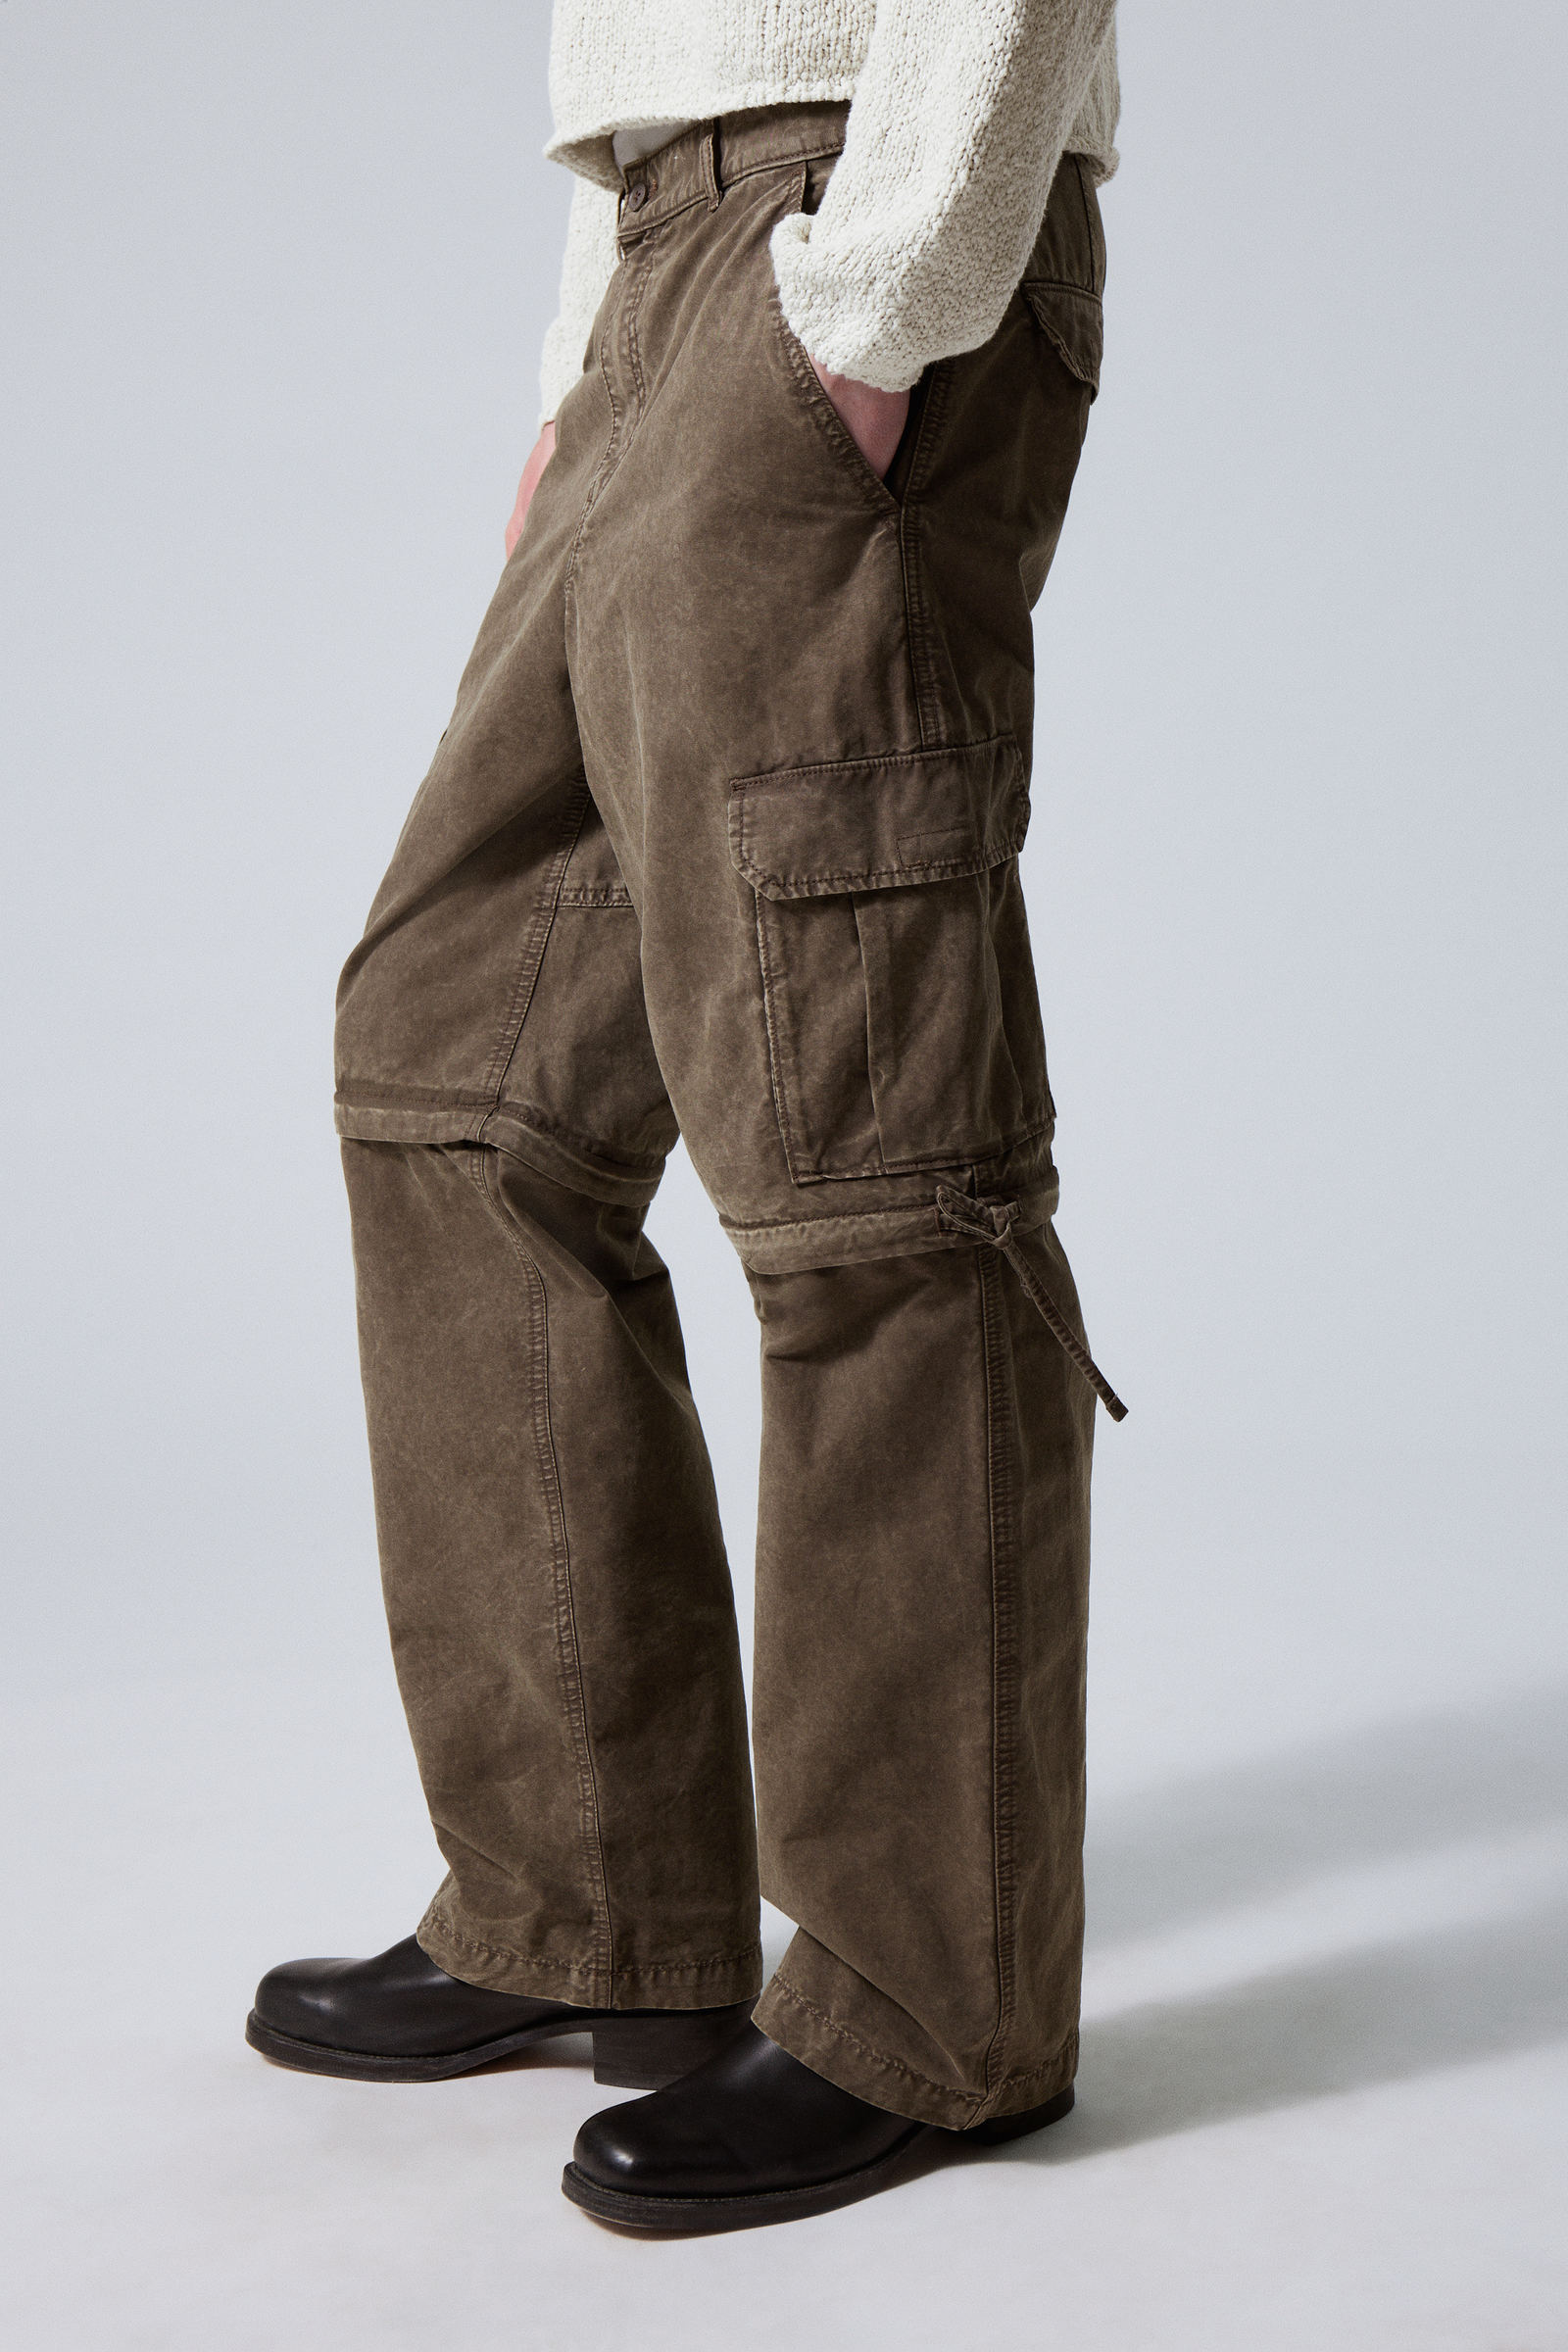 Men's Zip Off Cotton Convertible Pants Durable Cargo Shorts Trousers | eBay